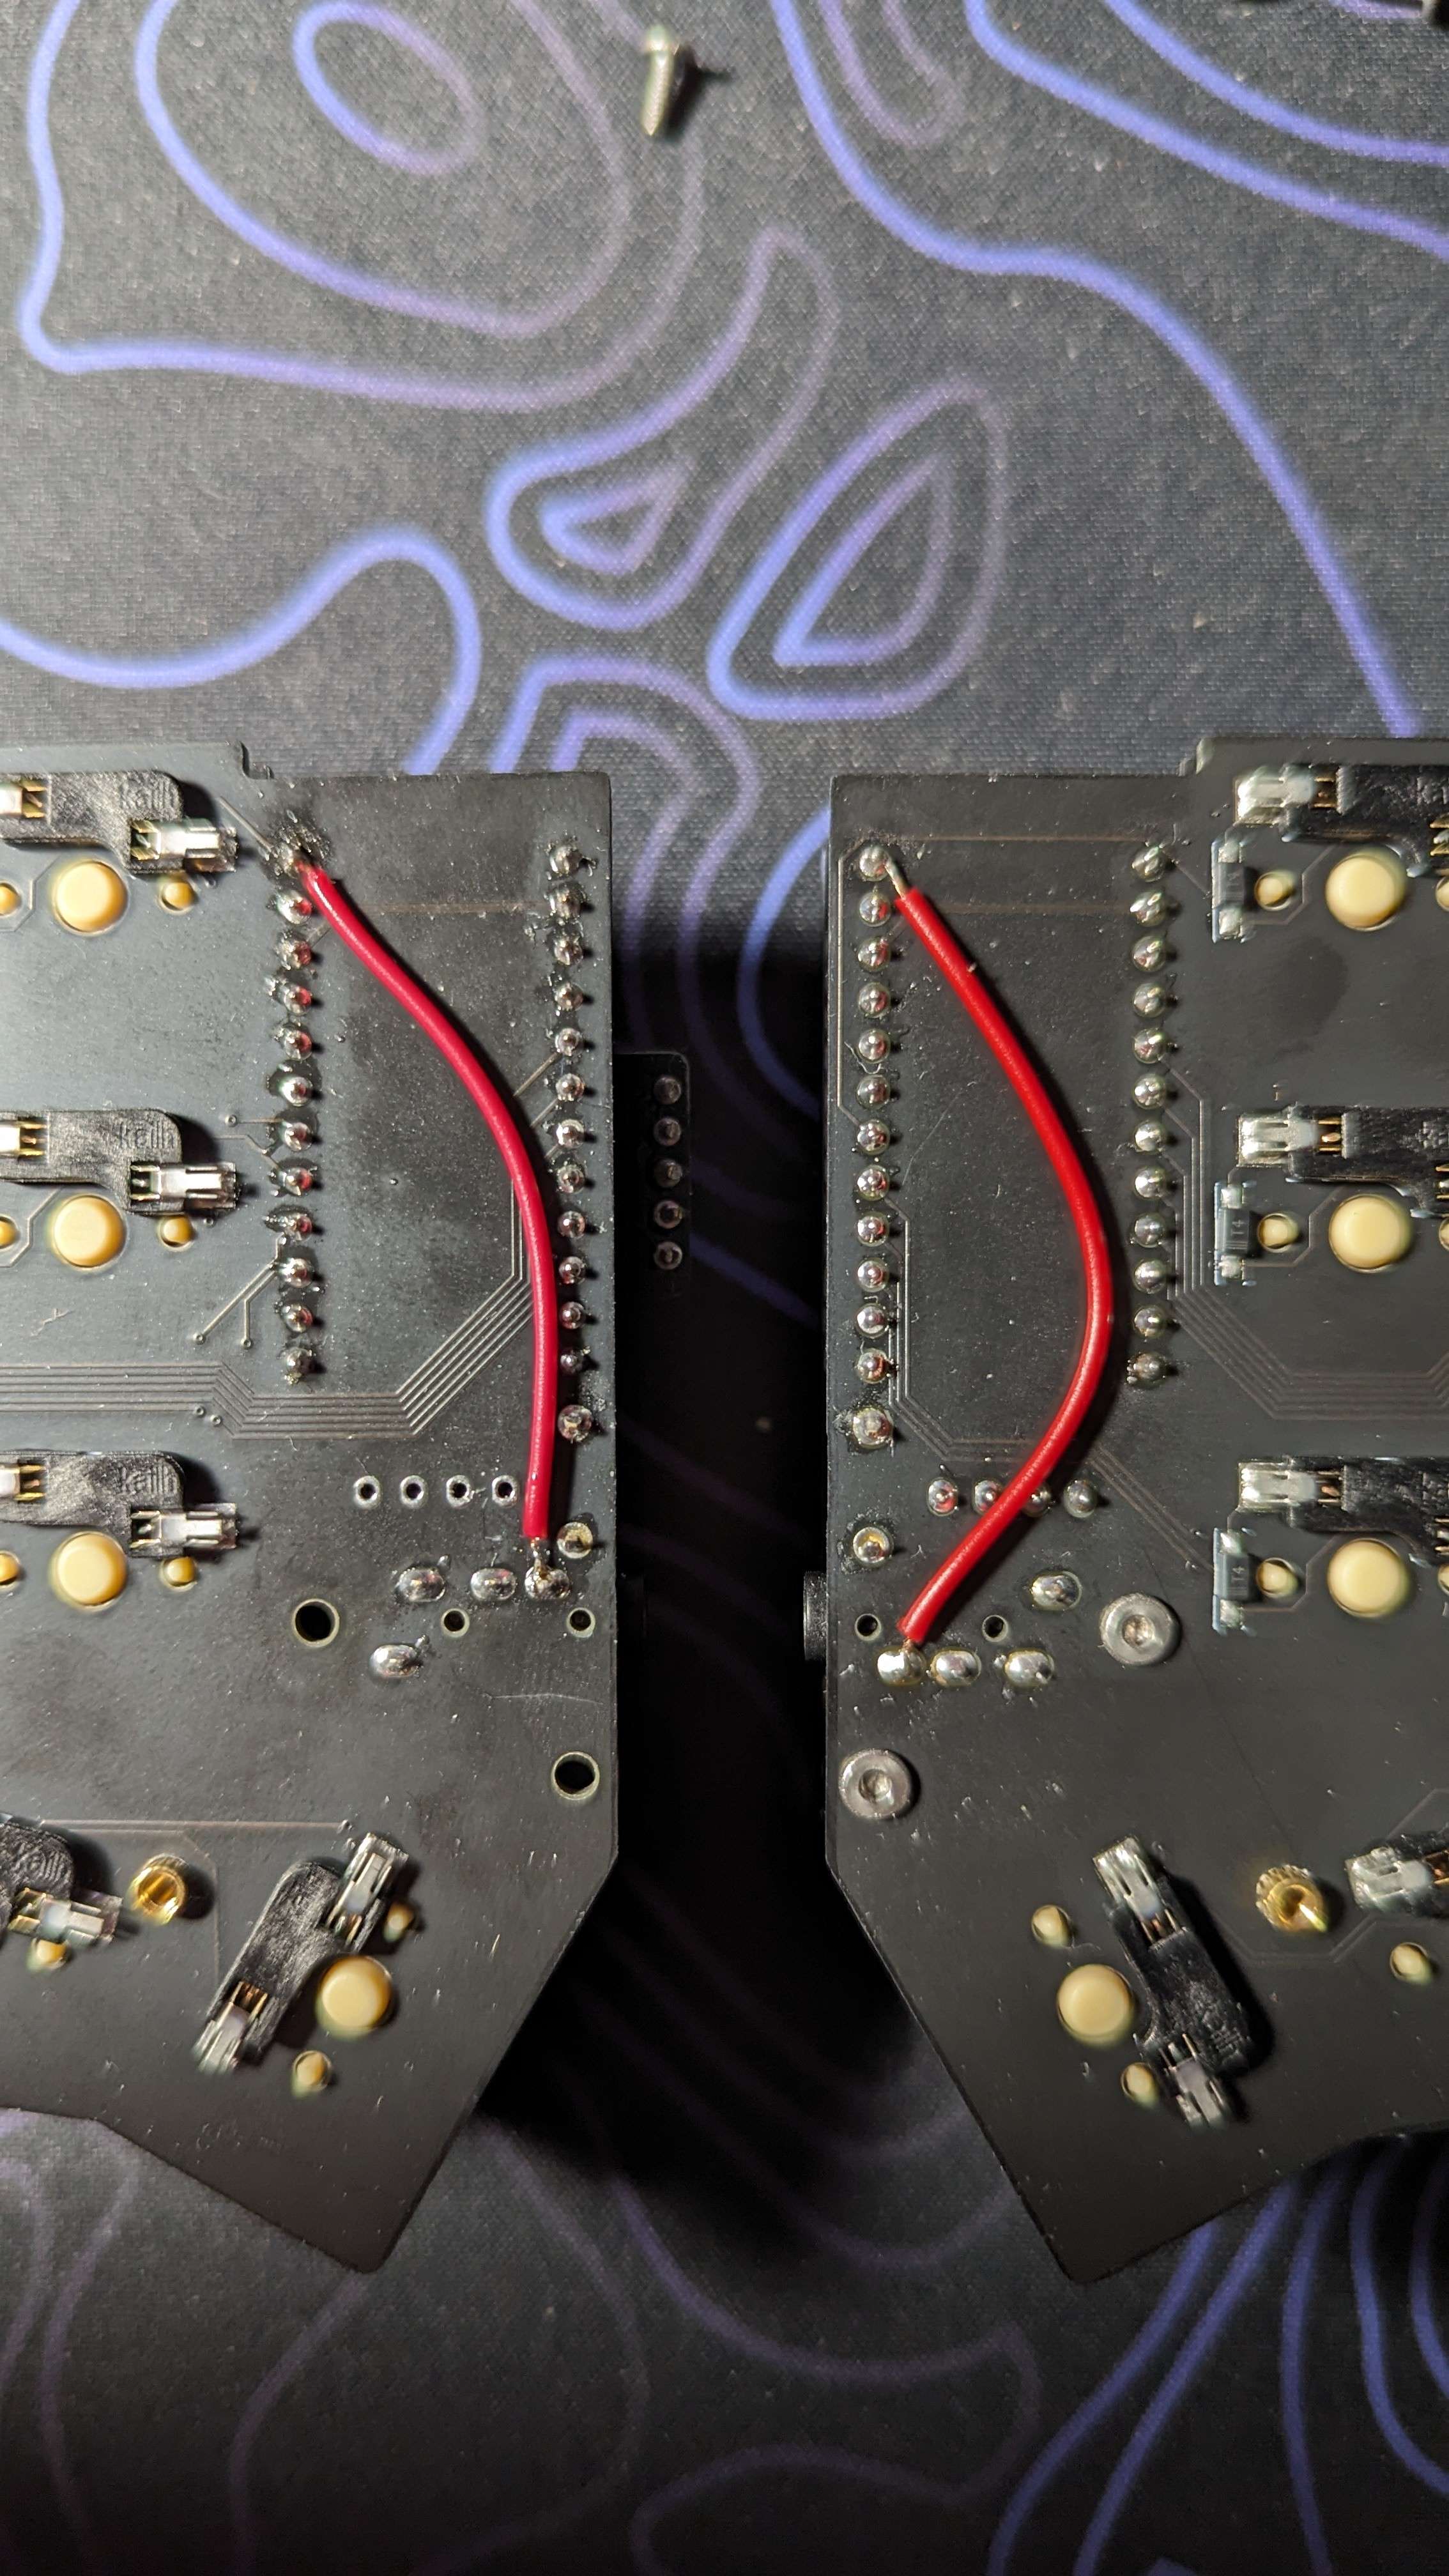 rewire shorted pins